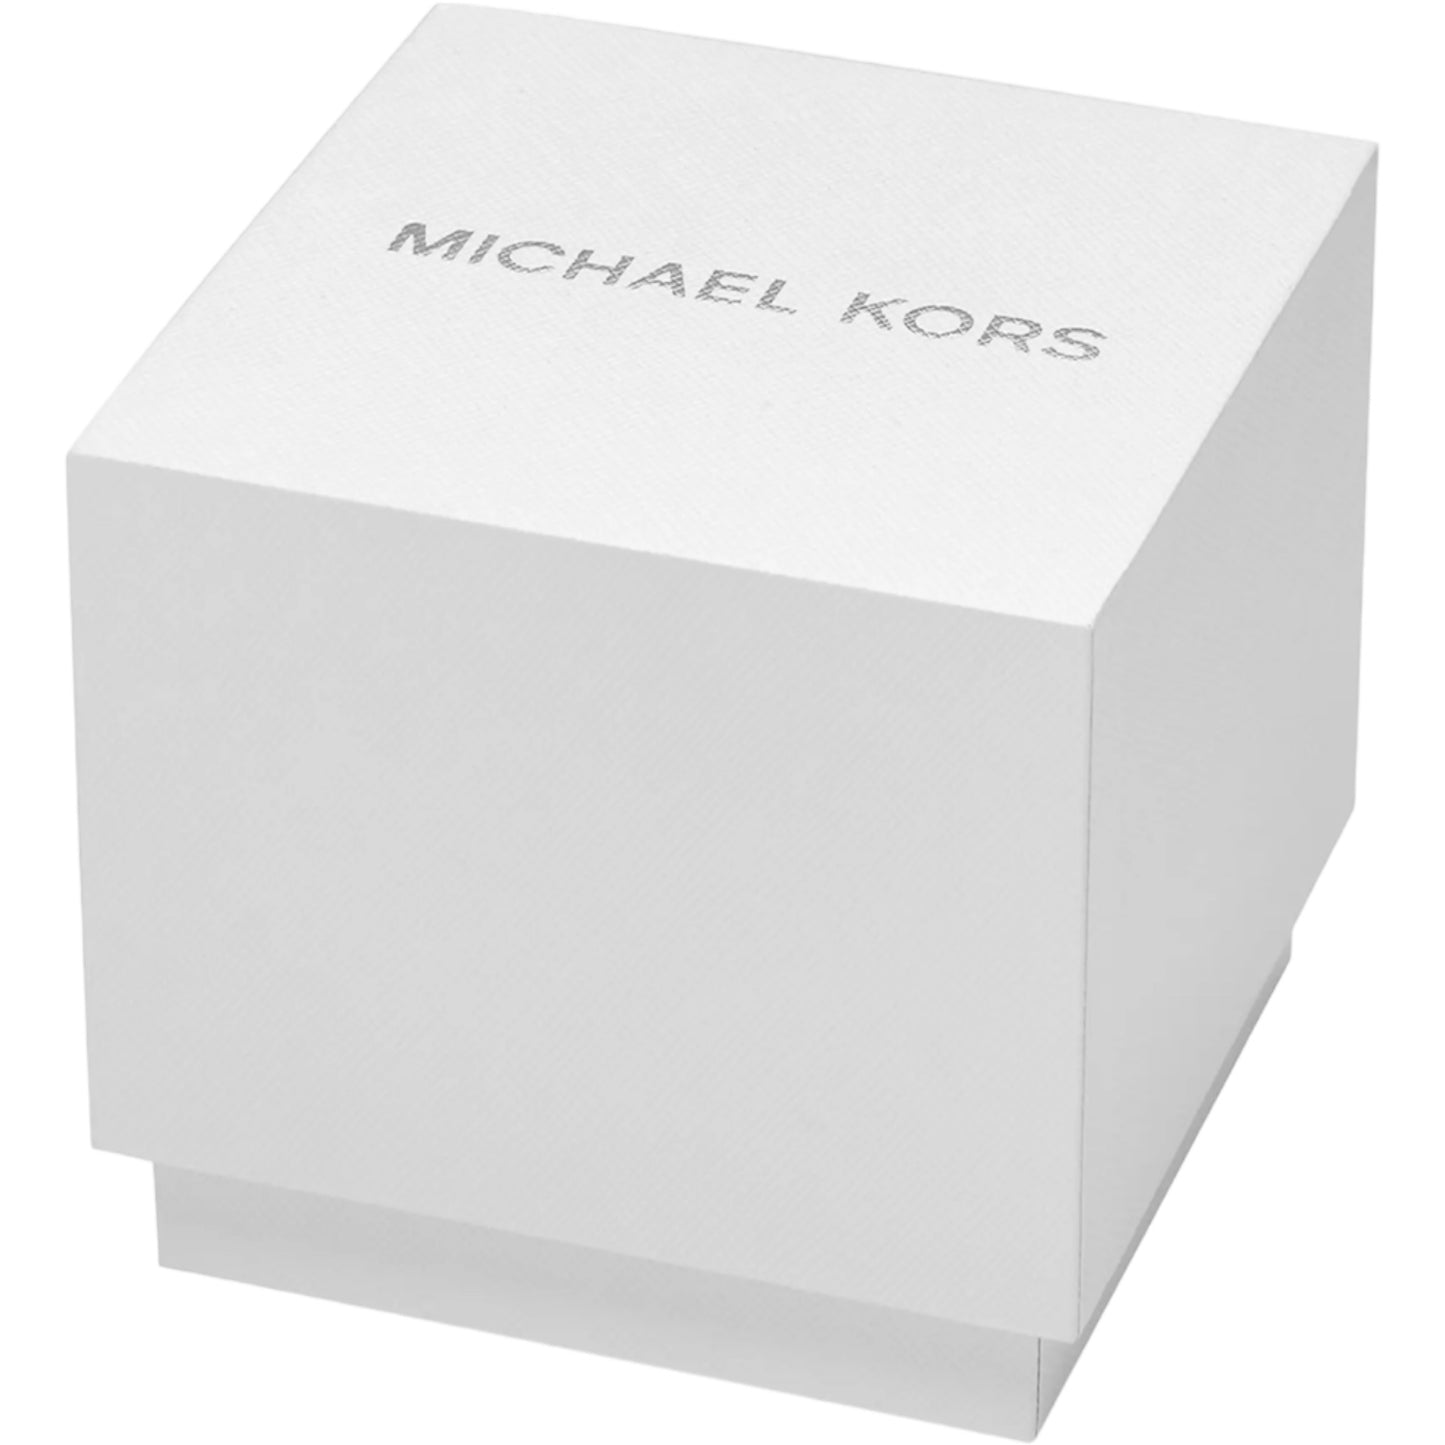 Michael Kors Charley Rhinestone Bracelet Watch, 38mm